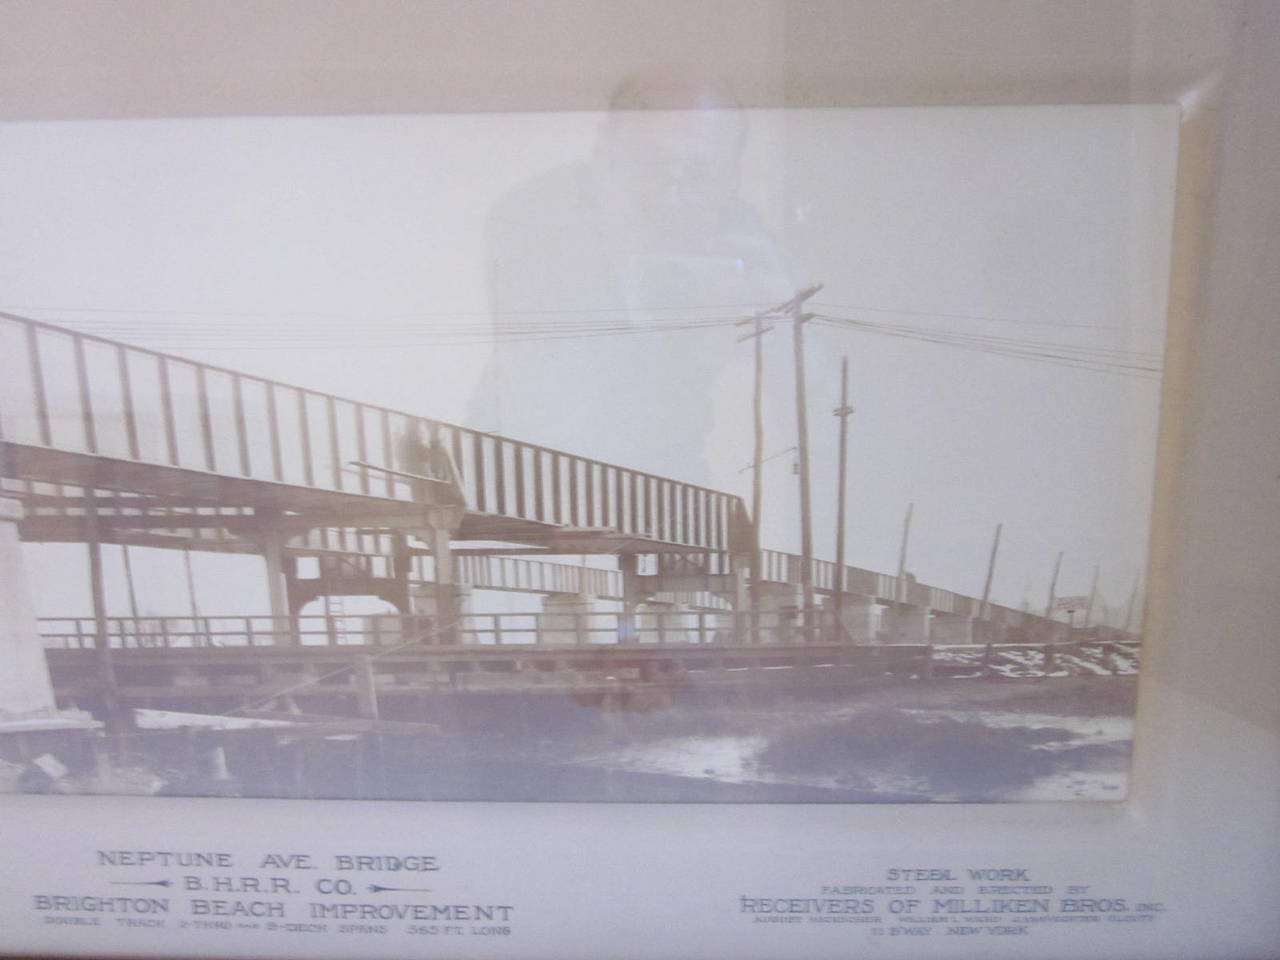 Industrial Large Historical Brighton Beach New York Railroad Bridge Photo For Sale